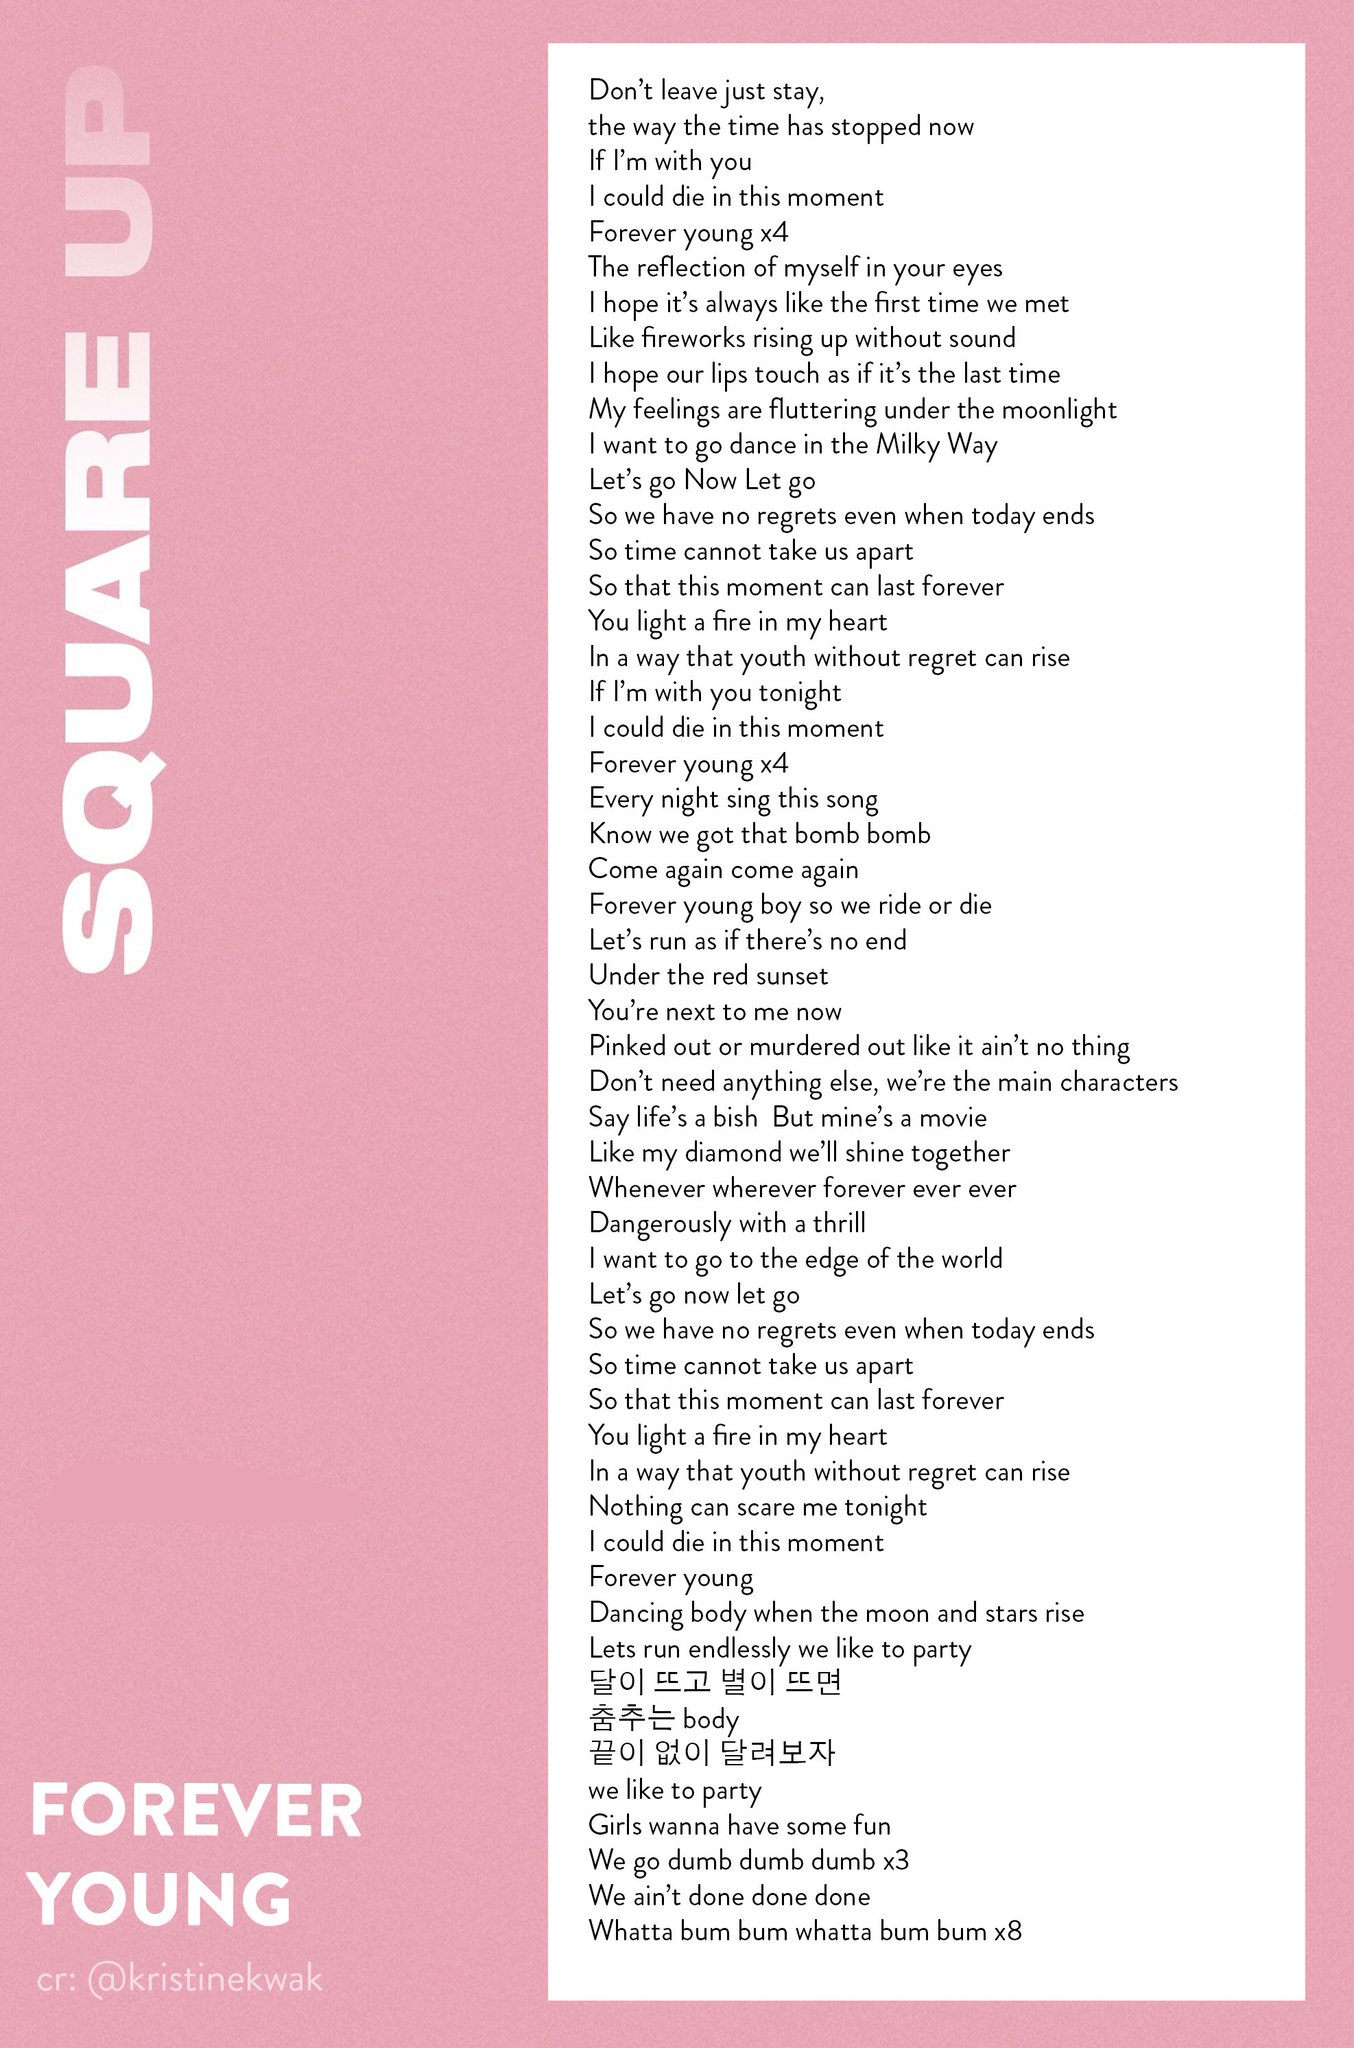 “#BLACKPINK_SQUAREUP FOREVER YOUNG lyrics cr: https://t.co/6KVJ4H8EWL” .